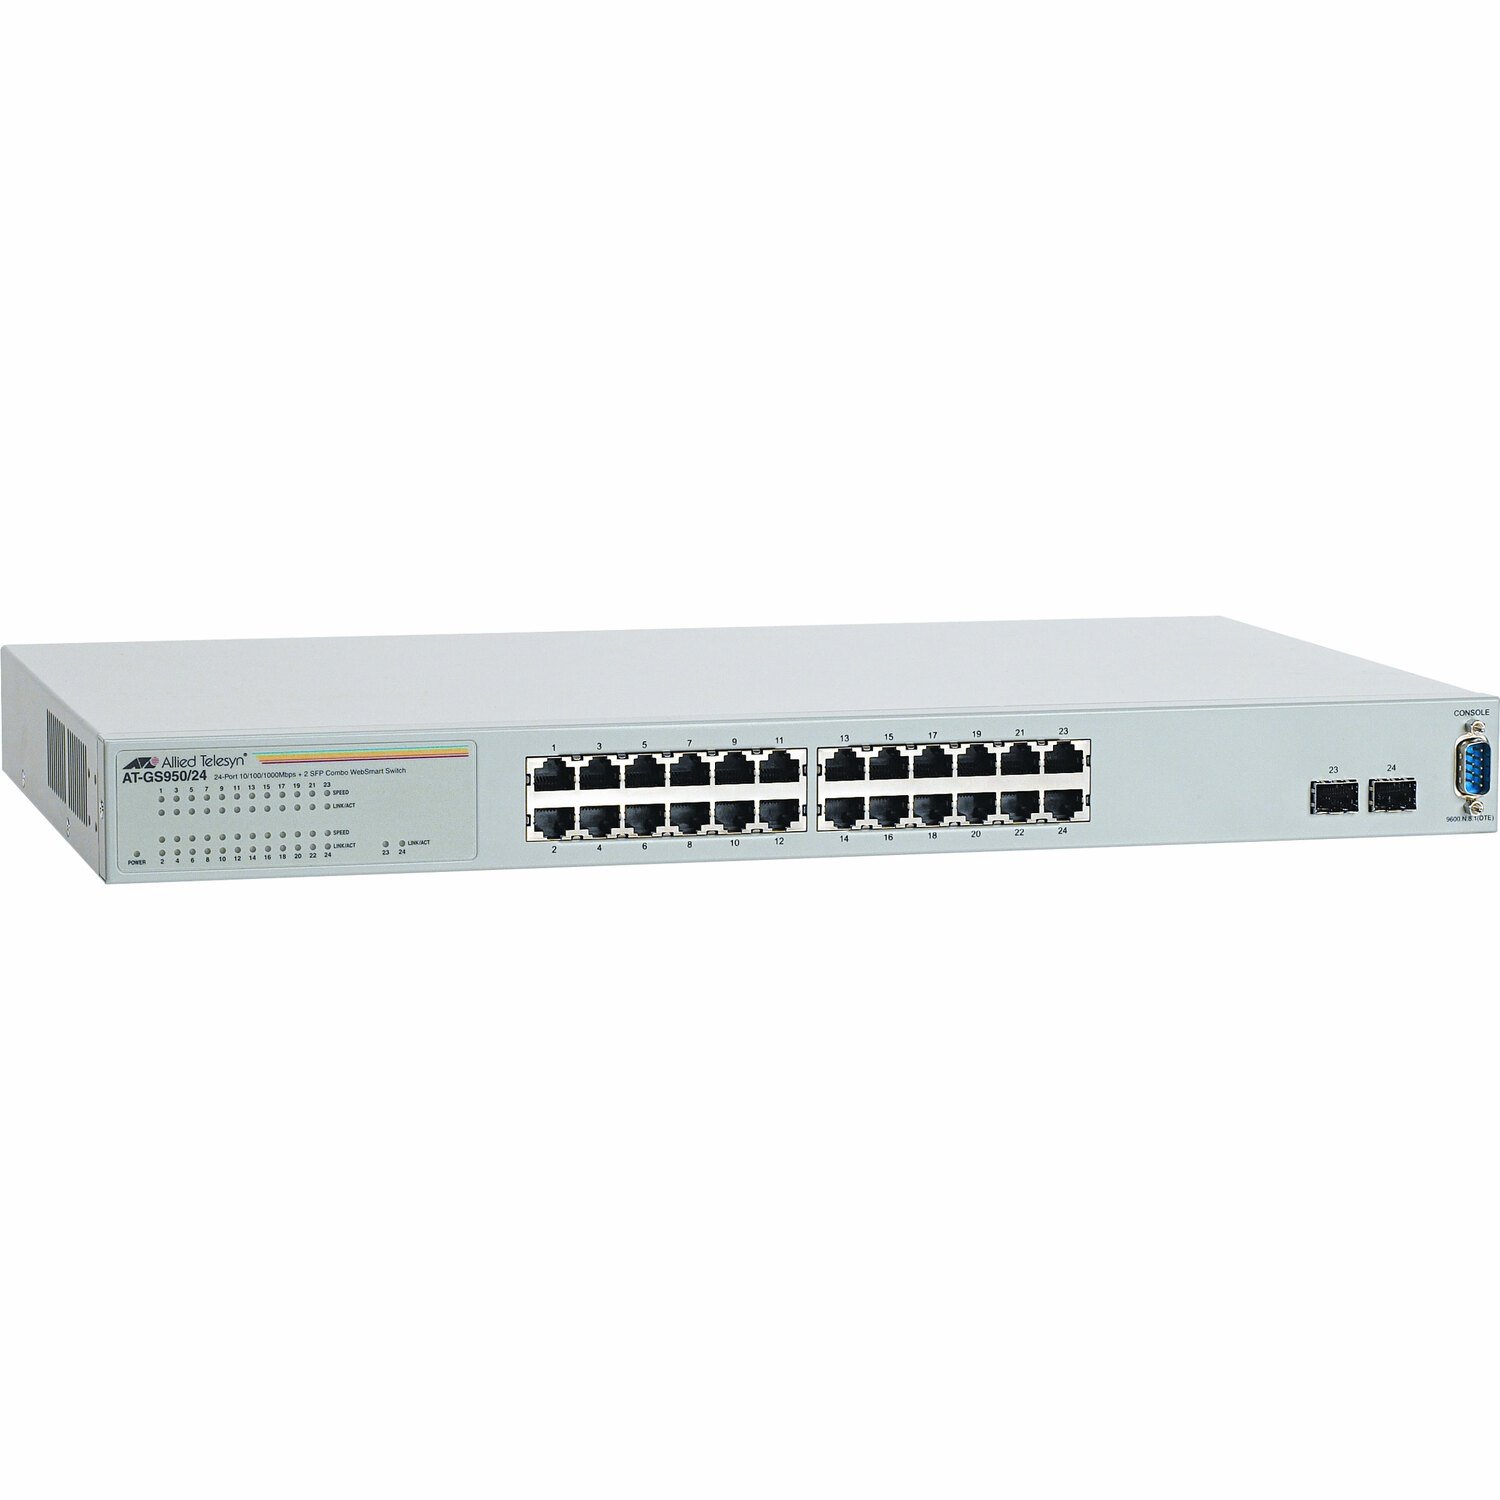 Allied Telesis AT-GS950/24 24 Port Gigabit WebSmart Switch